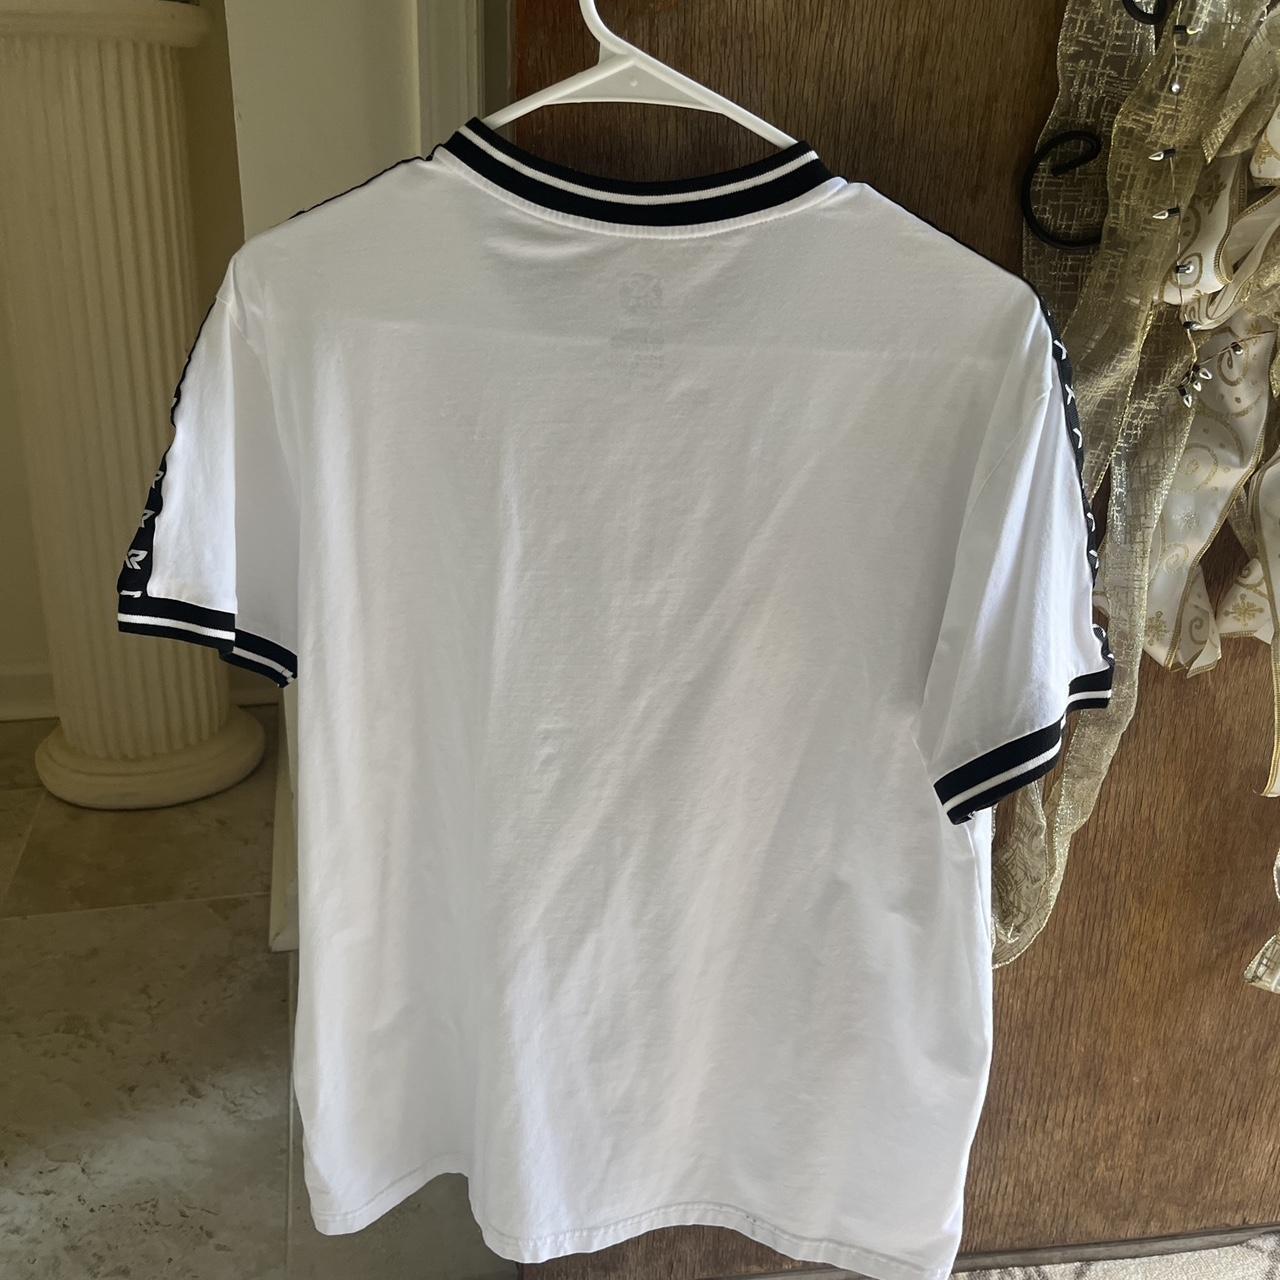 XRAY Polo Shirt (Men's Large - White/Black)... - Depop